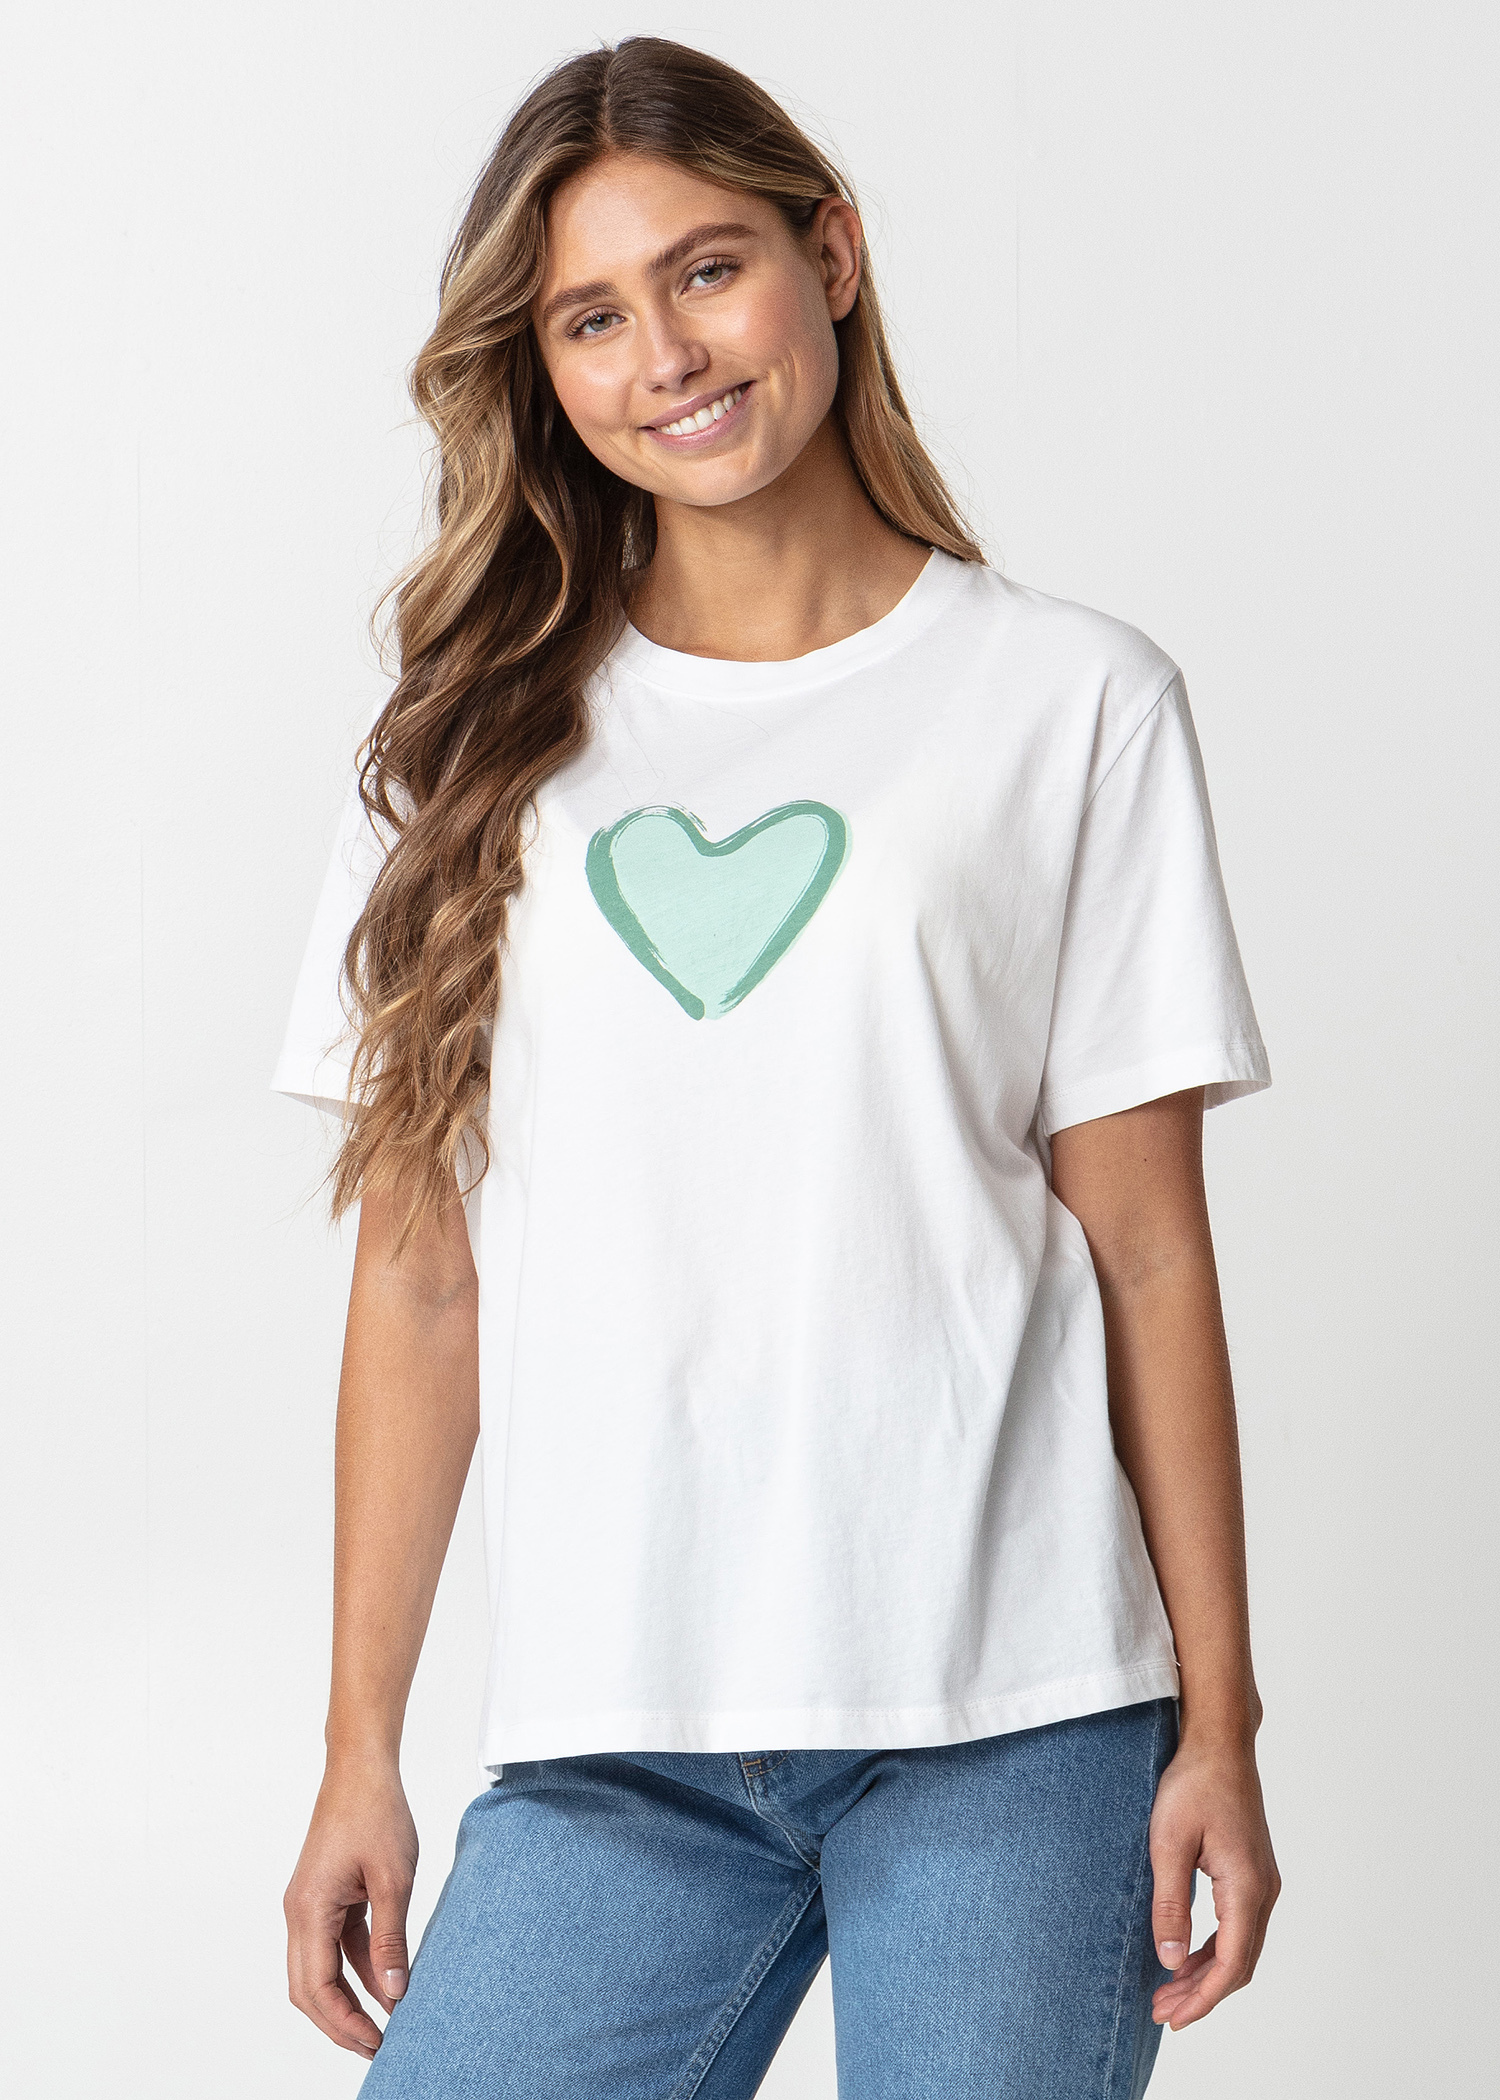 T-Shirt mit Herz-Motiv Image 0